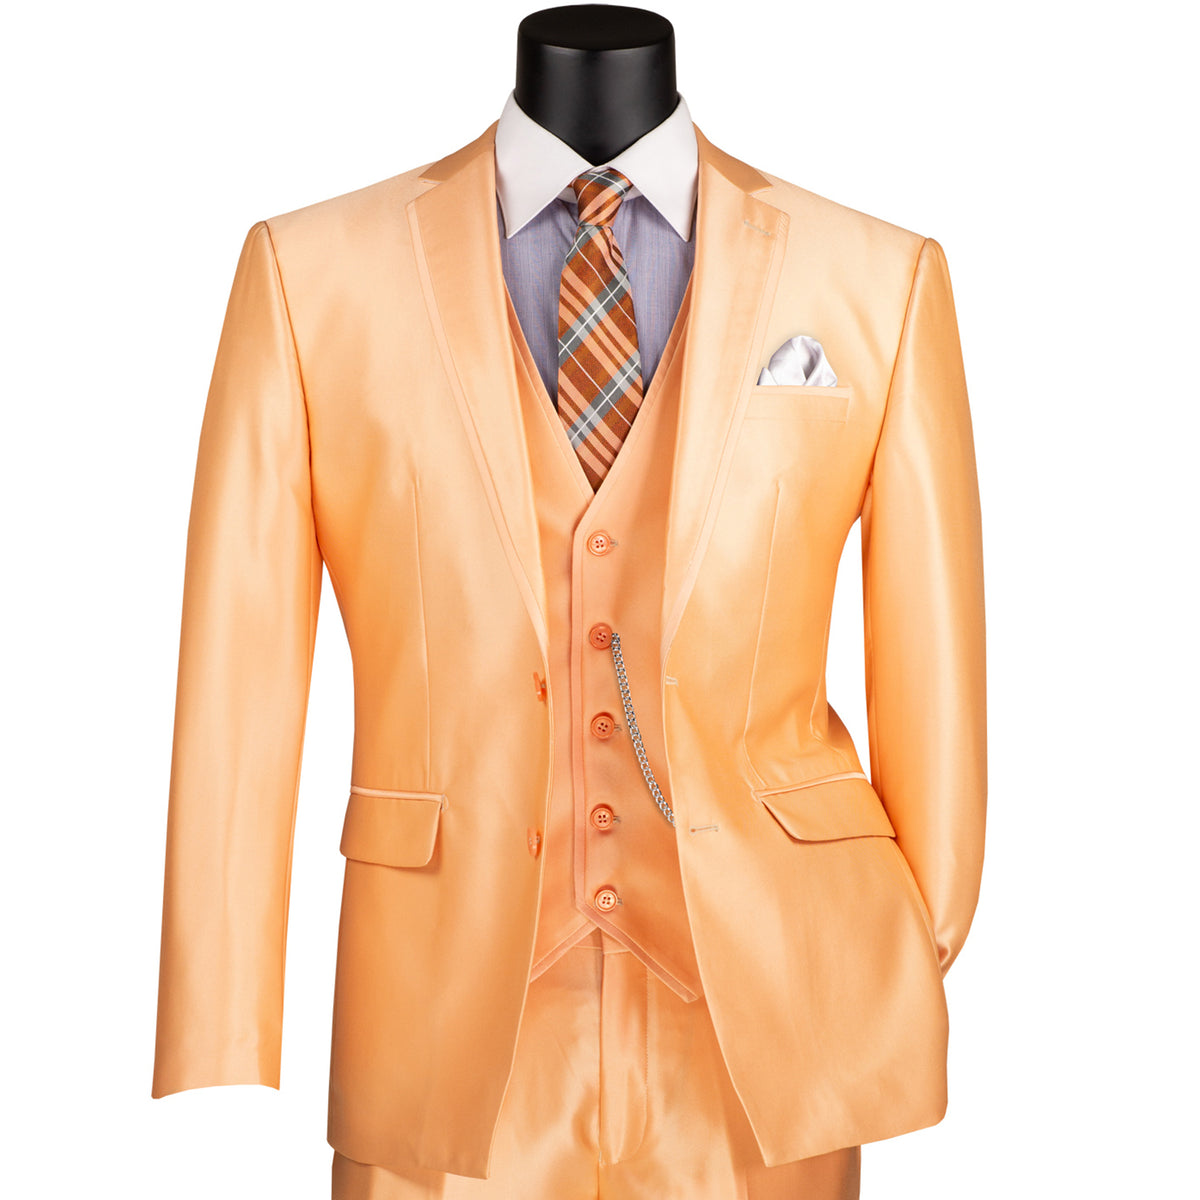 Satin 3-Piece 2-Button Slim-Fit Suit in Melon Orange